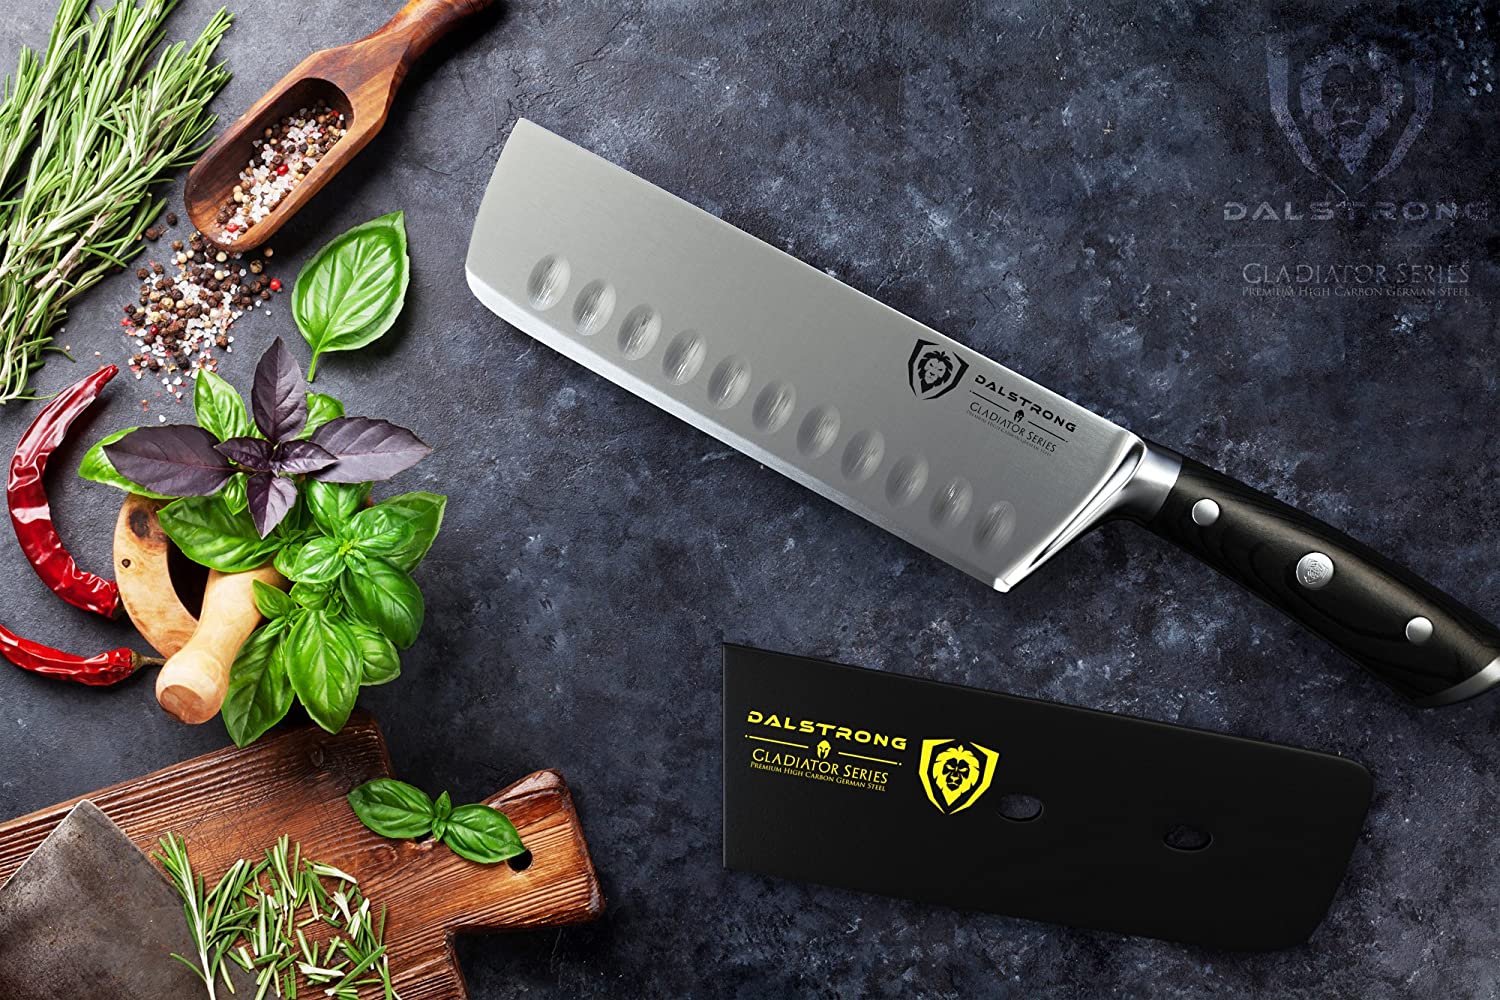 Best overall nakiri Japanese vegetable knife- DALSTRONG 7 Gladiator Series in kitchen